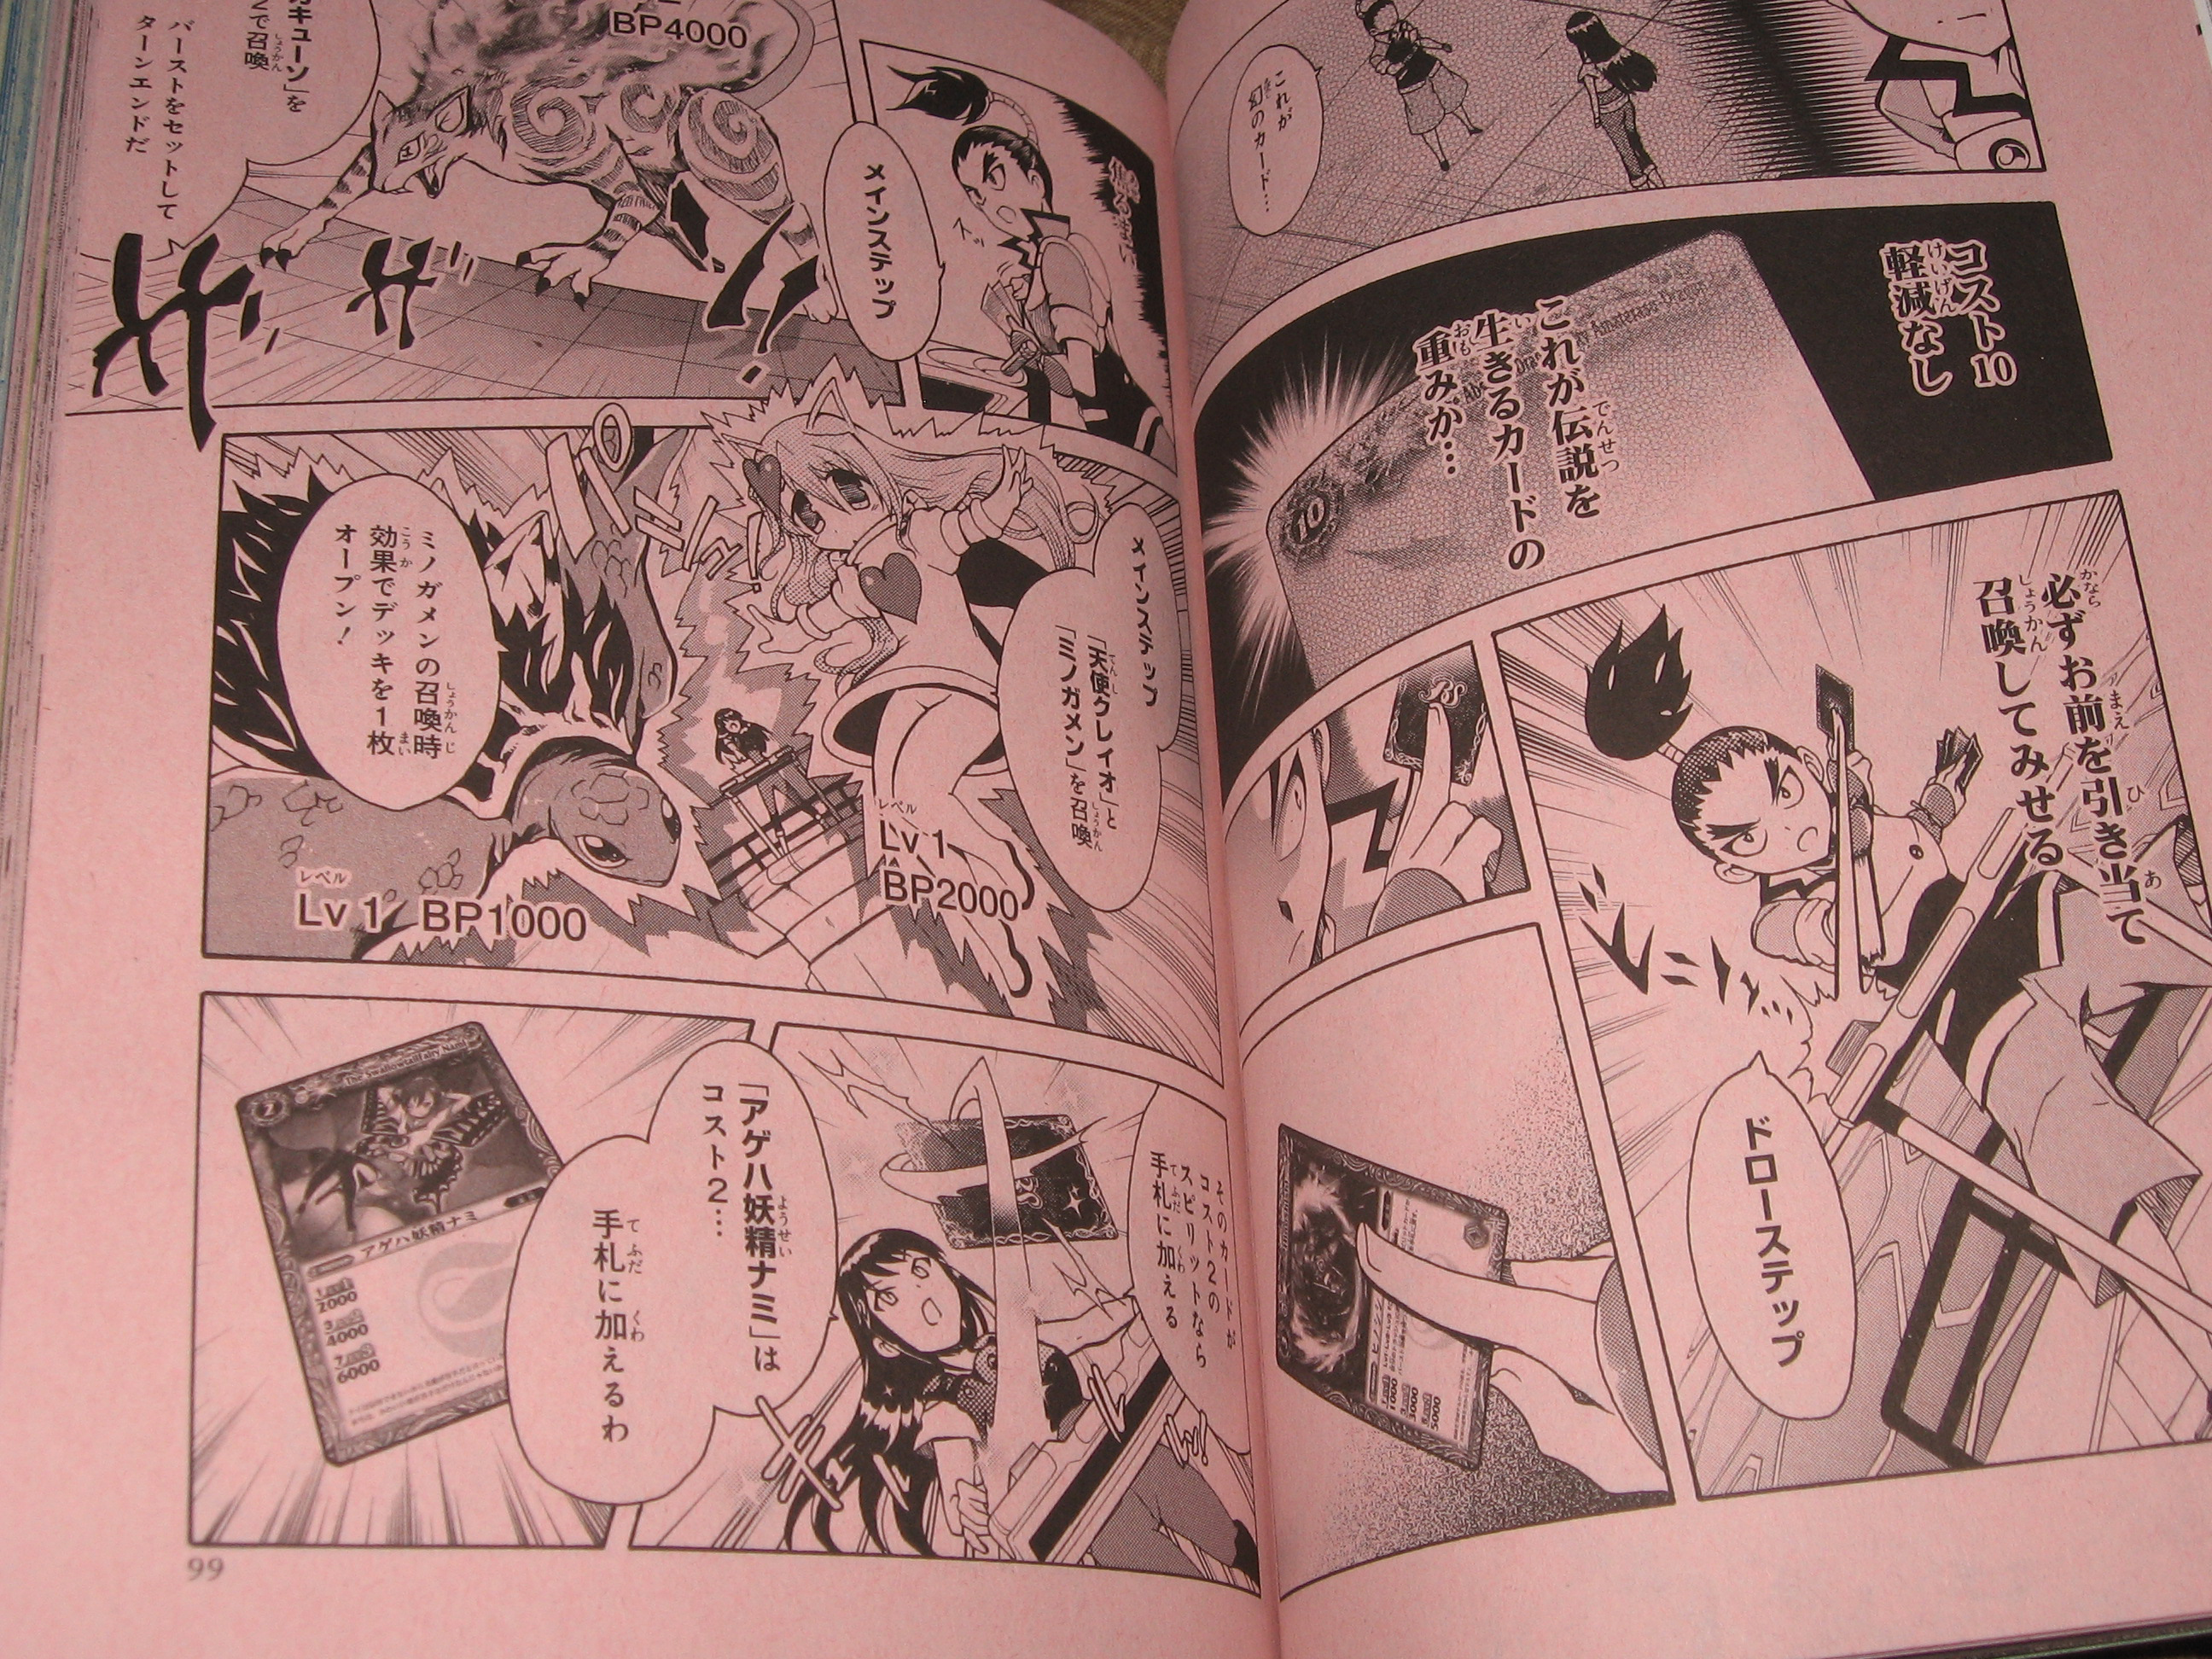 Blue Hair Battle Spirits Manga Characters - wide 11